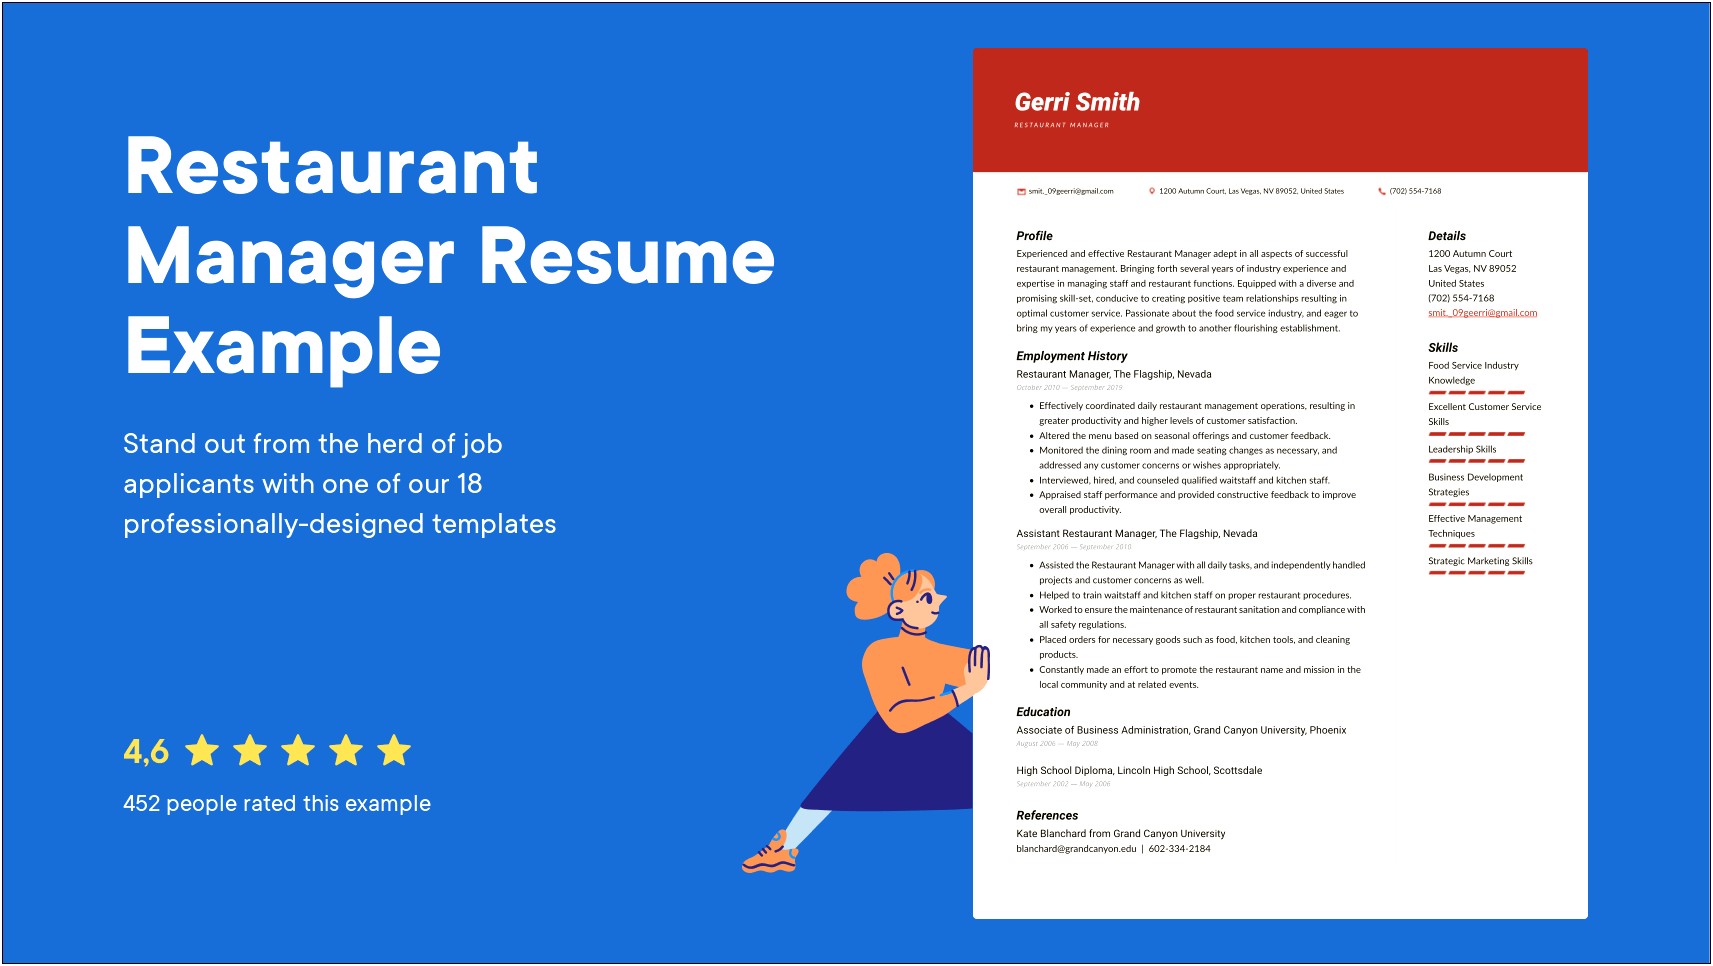 Resume For Manager At Restaurant